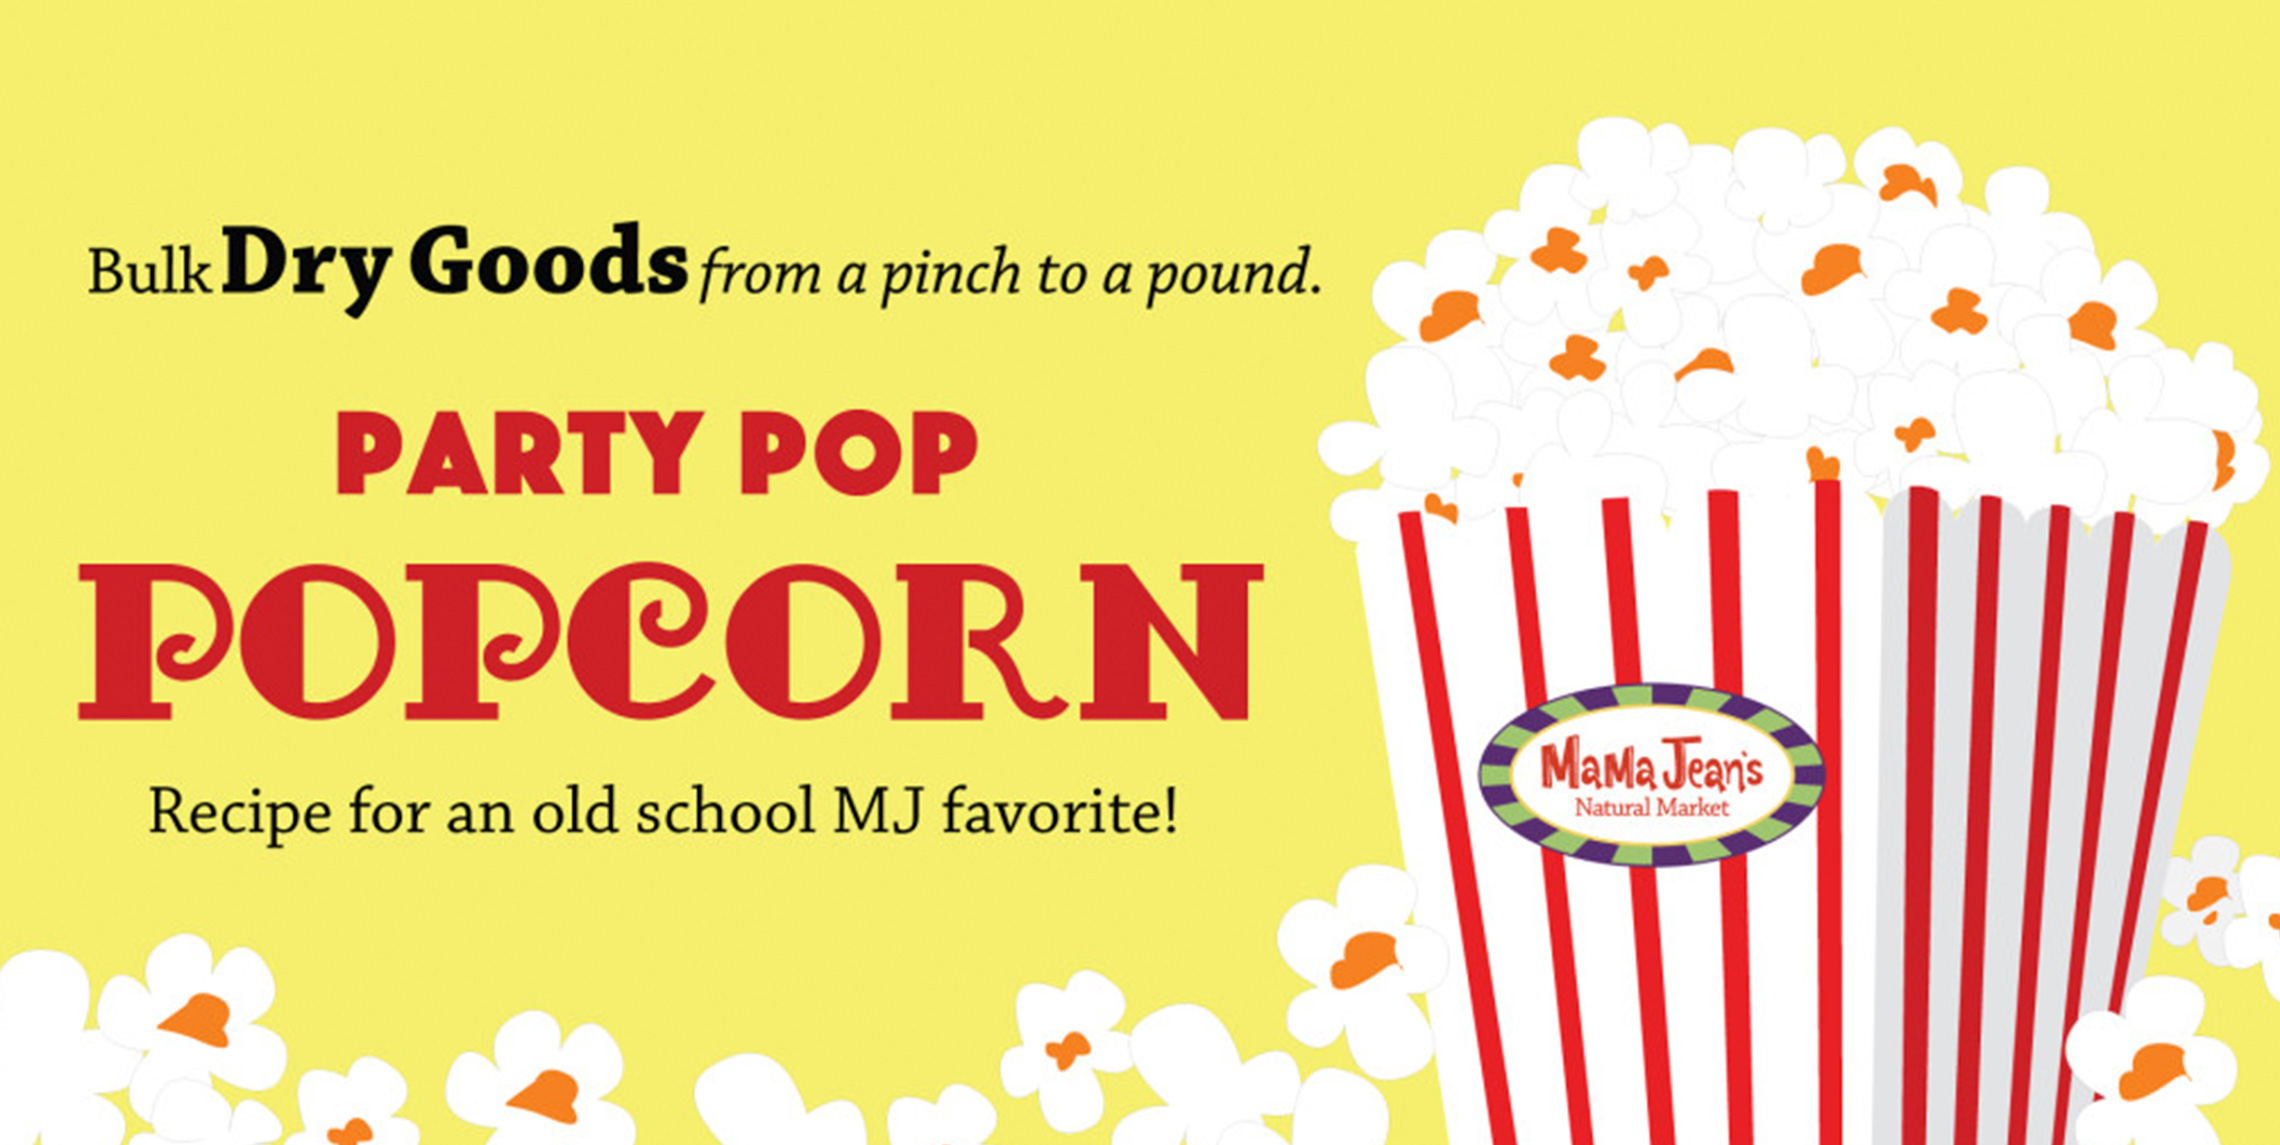 Party Pop Popcorn